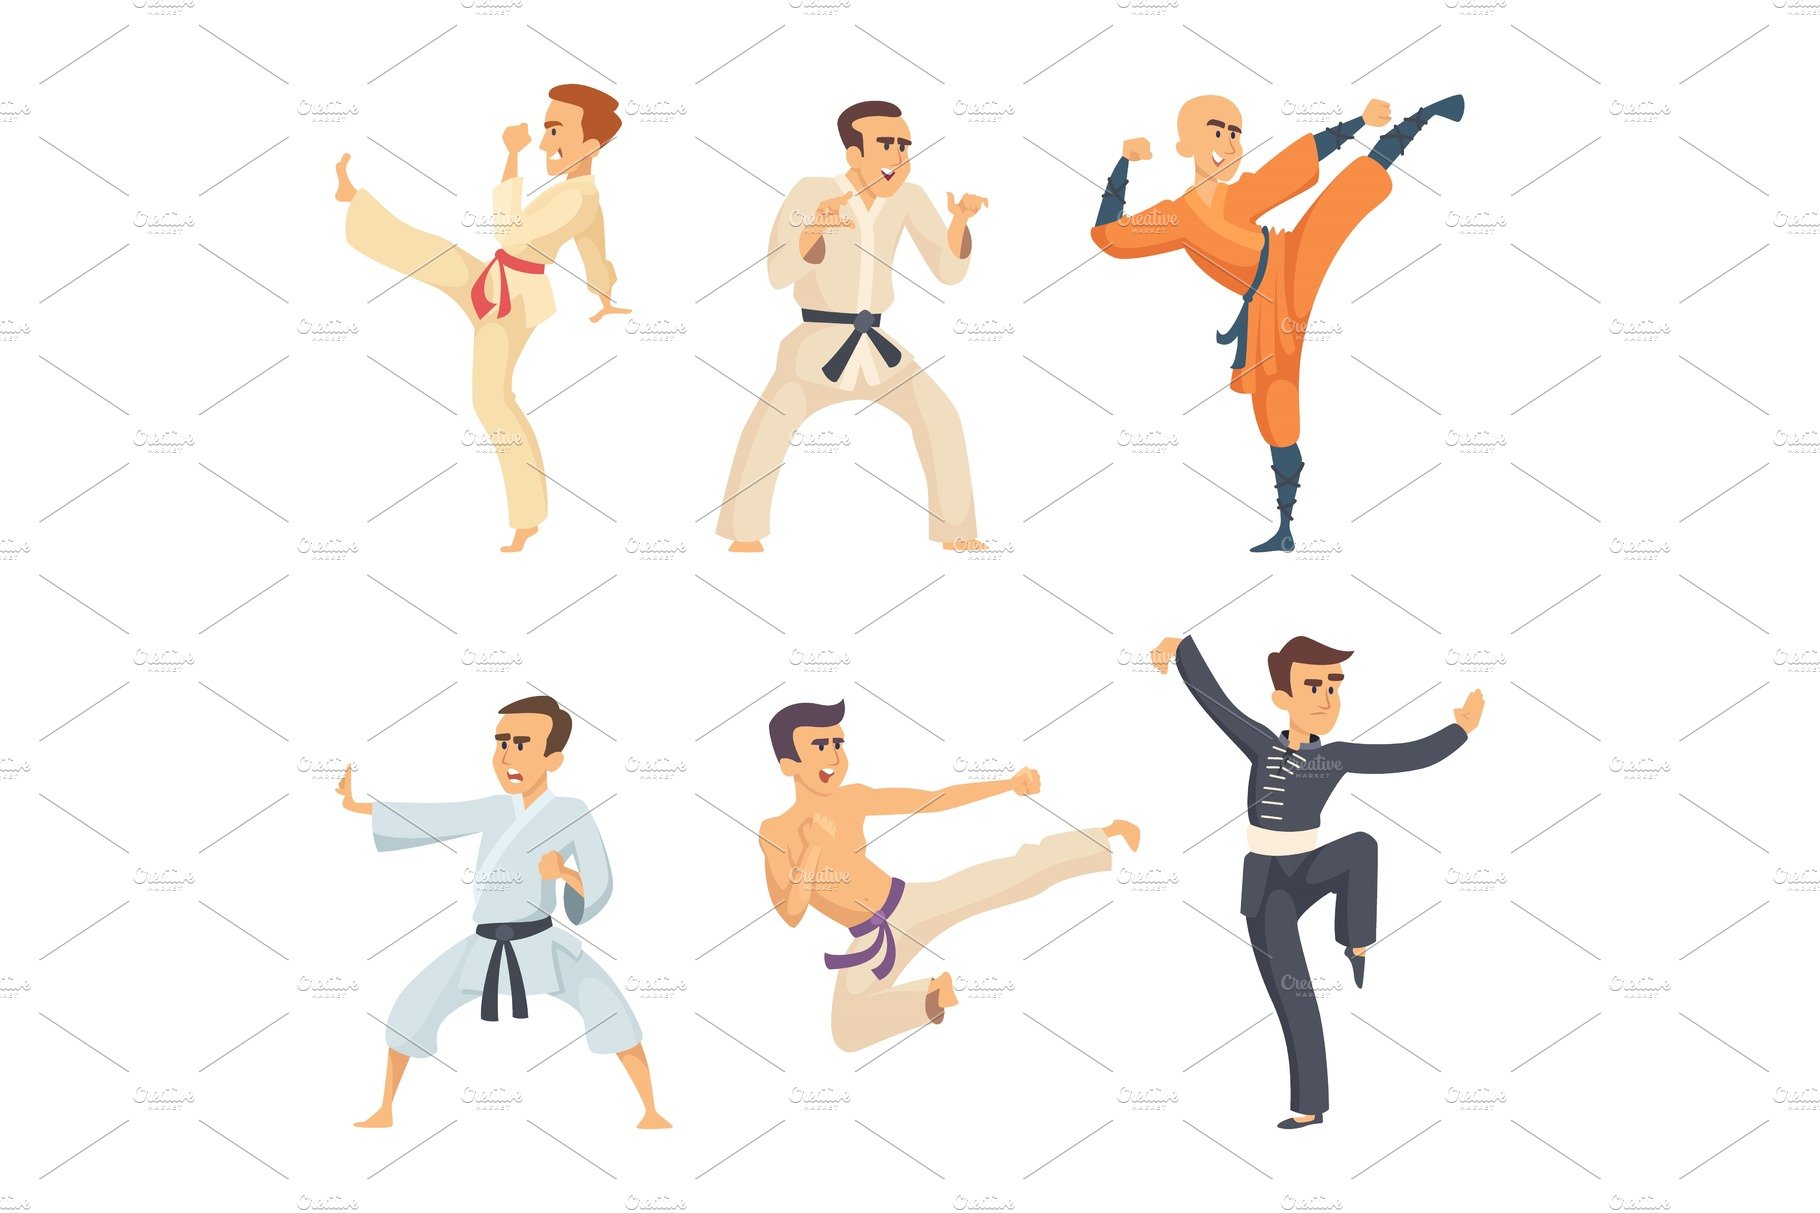 karate poses 6 by Markus-Tercero on DeviantArt